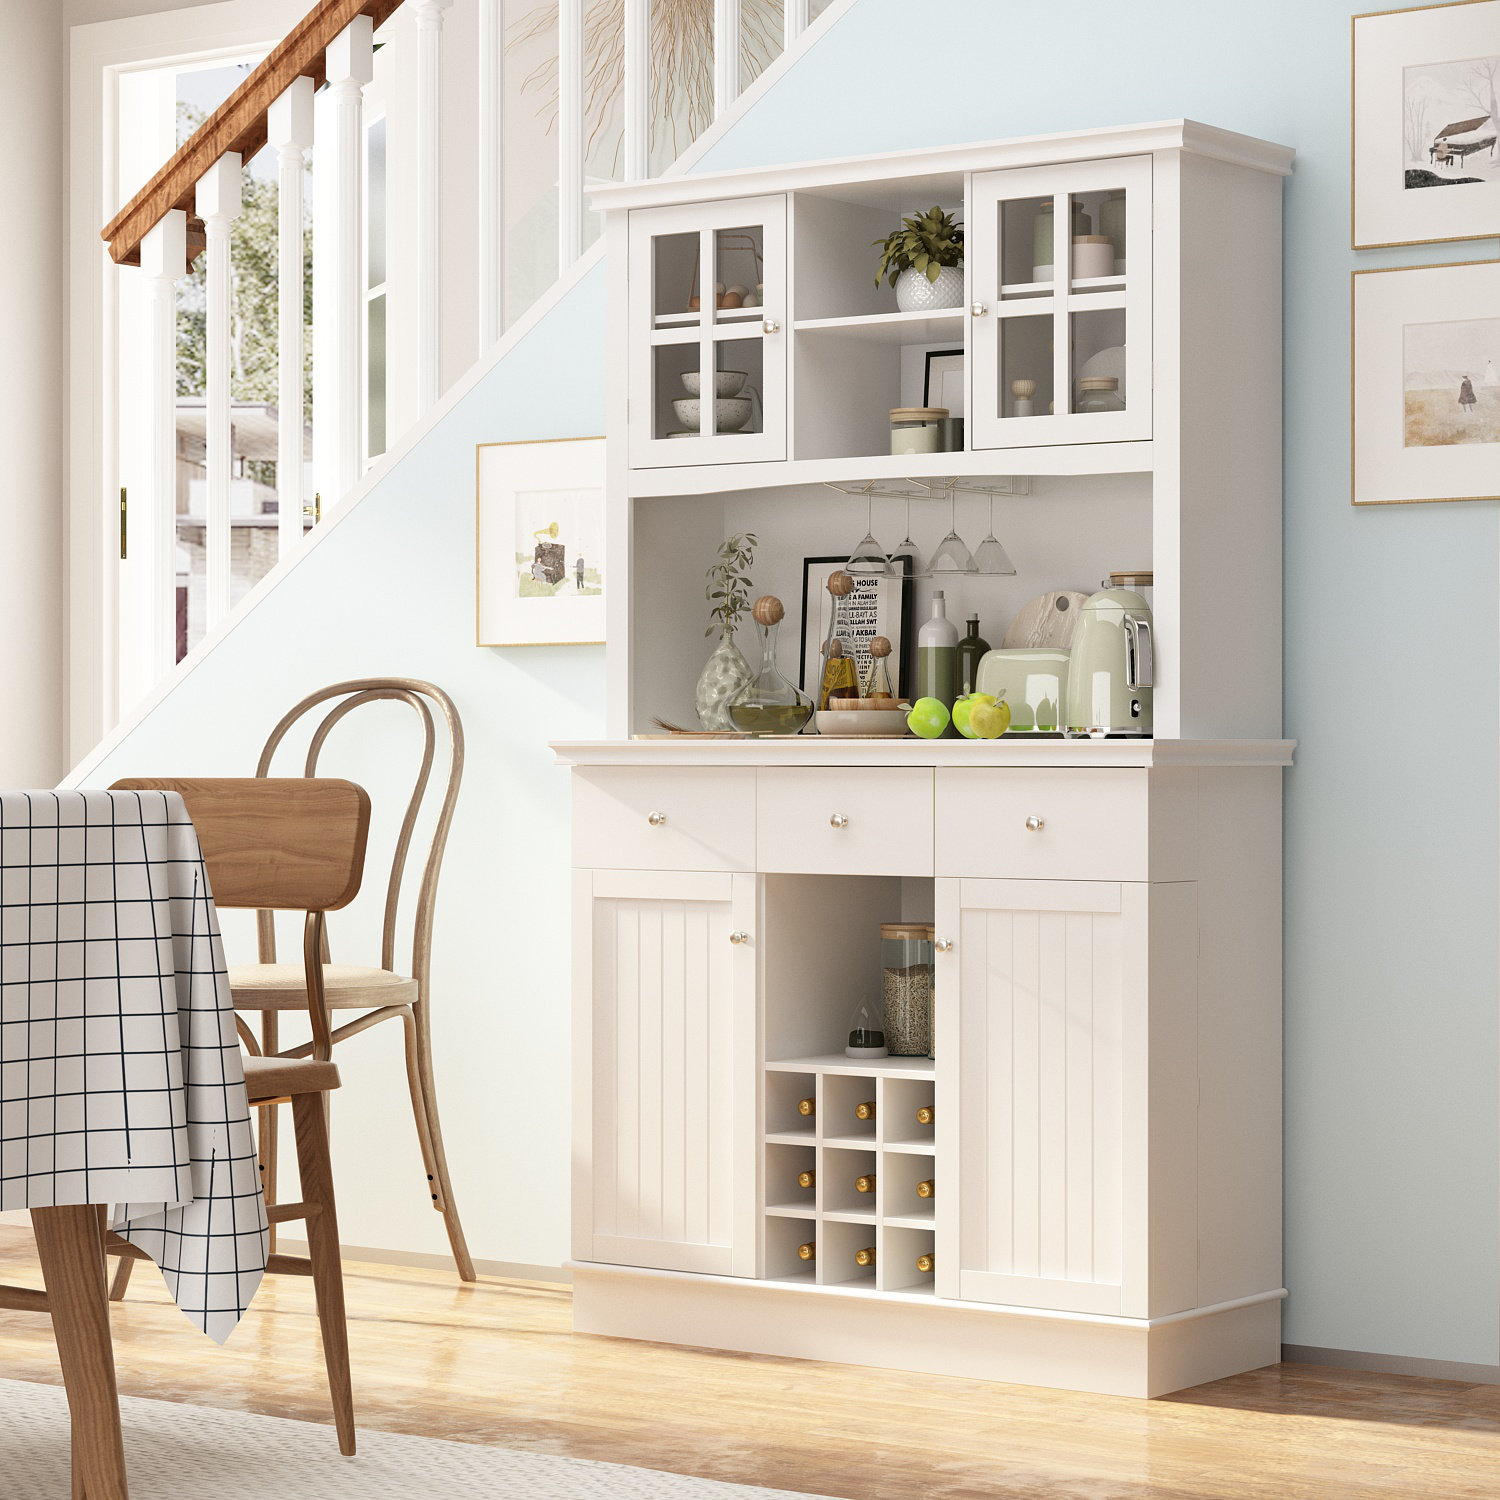 Wildon Home® Cargile 73.6'' Kitchen Pantry & Reviews | Wayfair